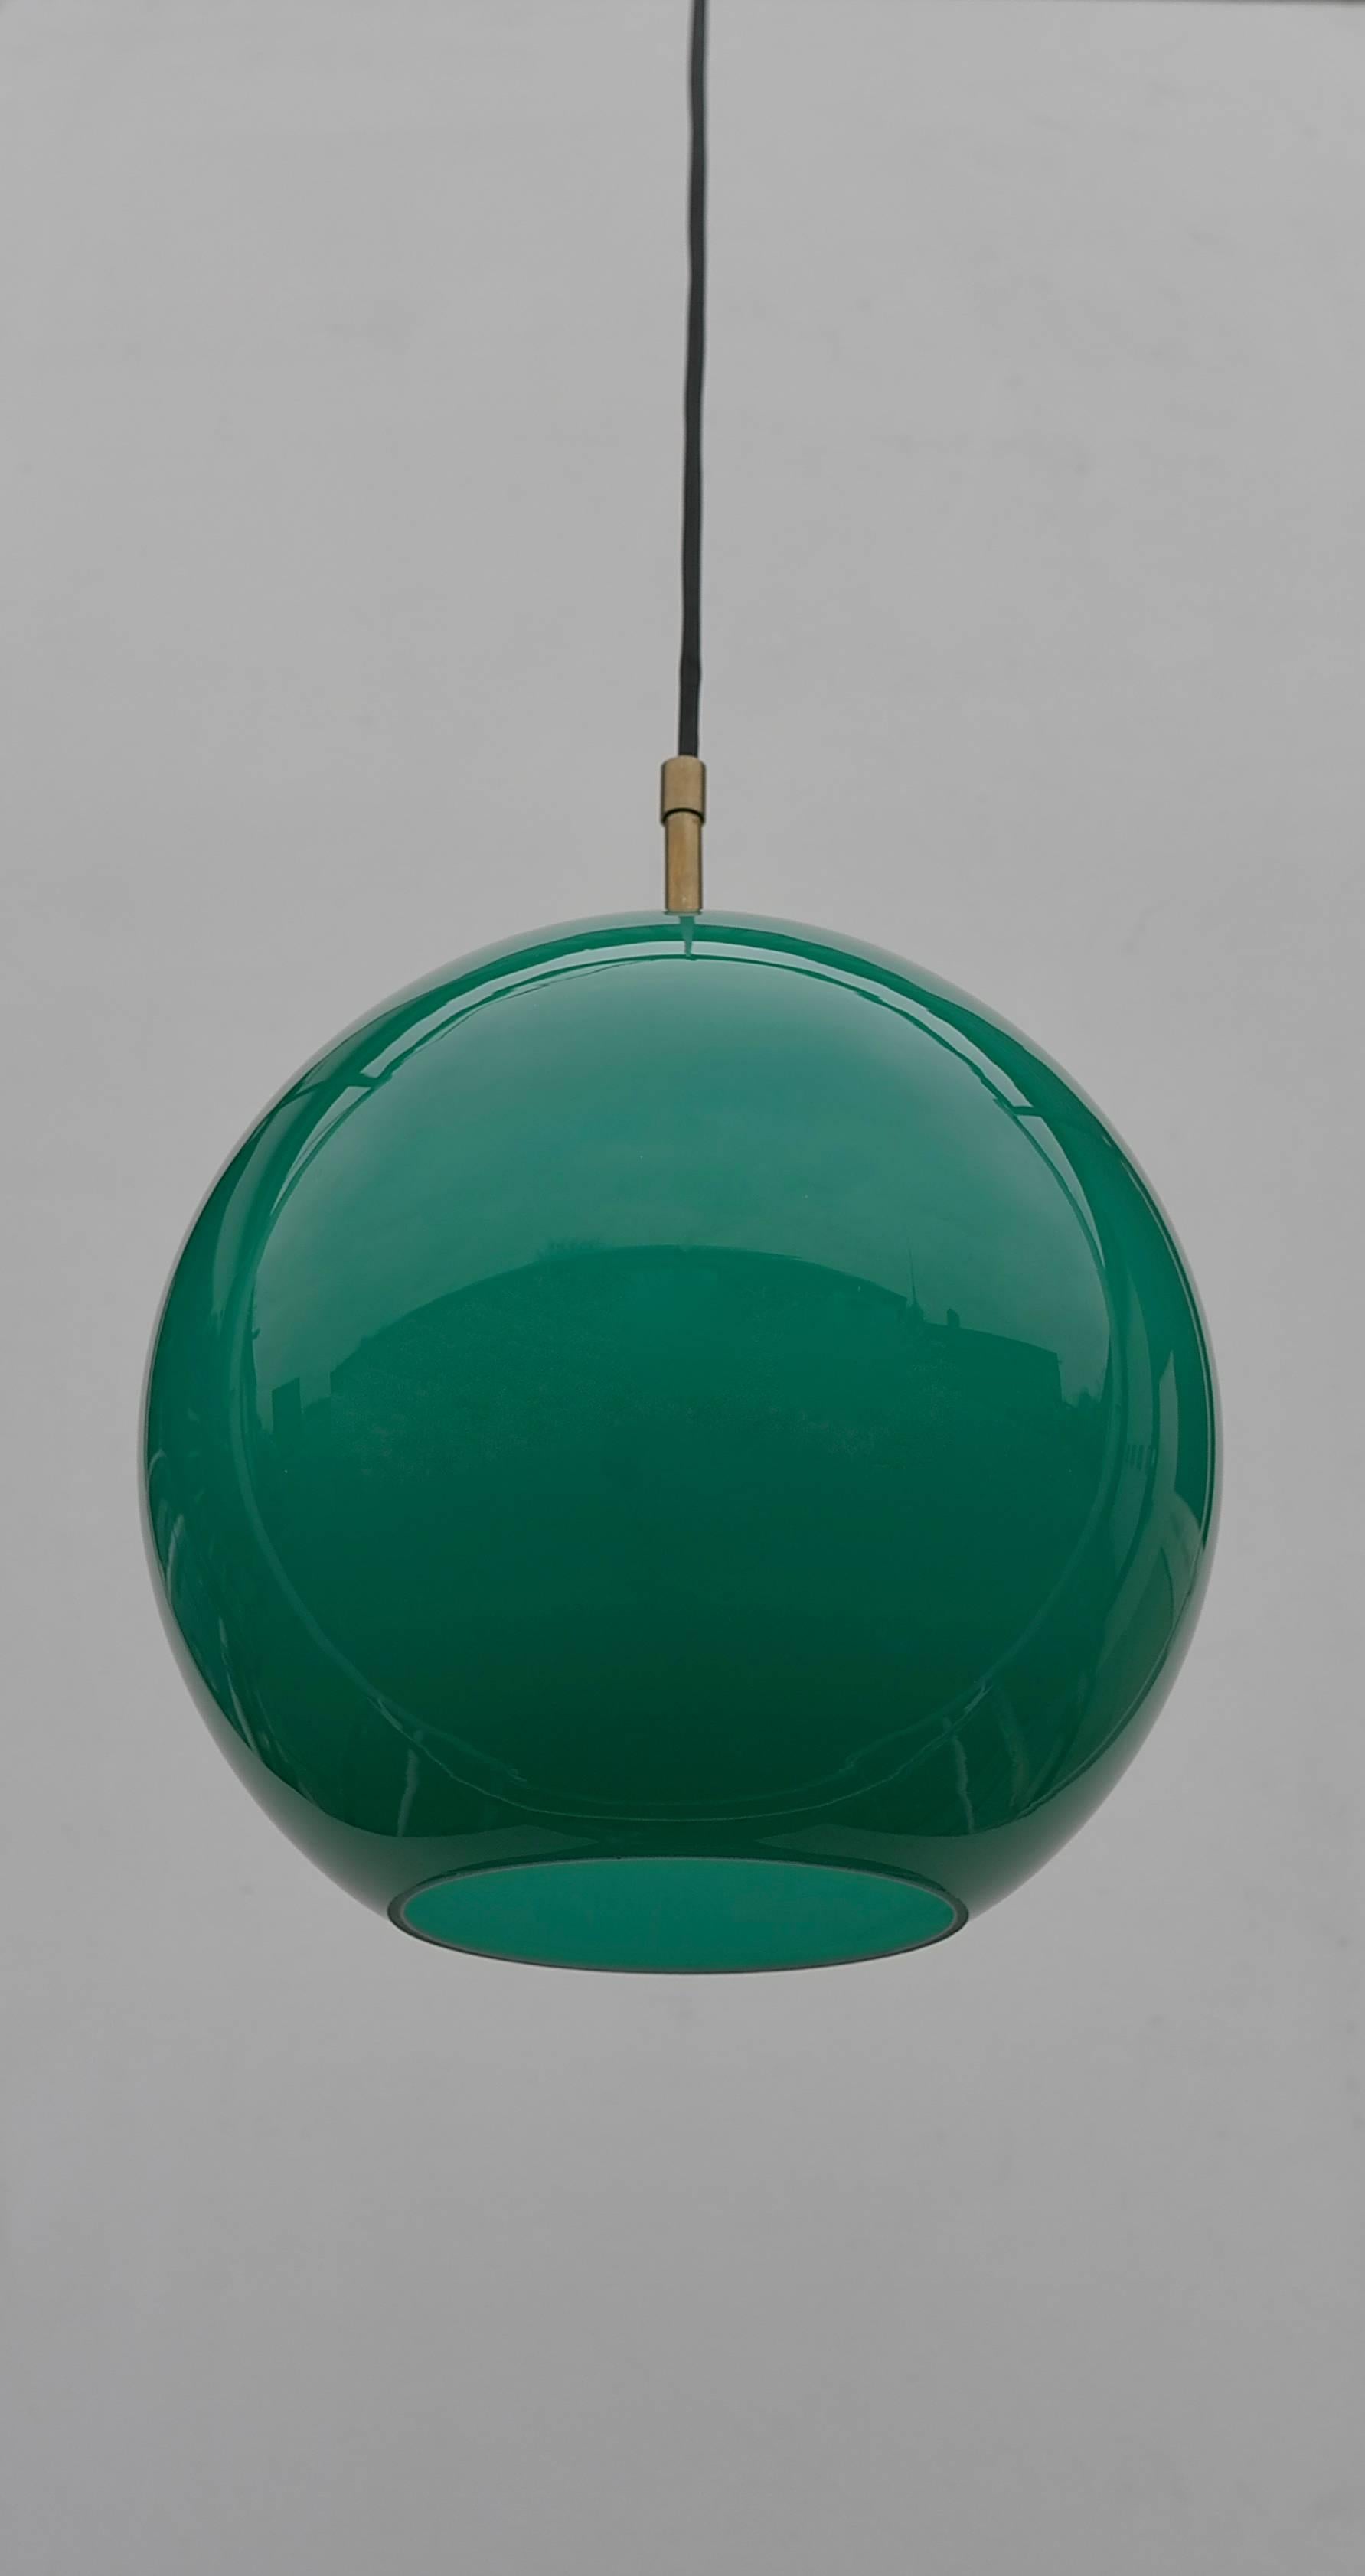 3x Uno & Östen Kristiansson Glass Pendant Lamp in Jade Color, Sweden, 1960s For Sale 1